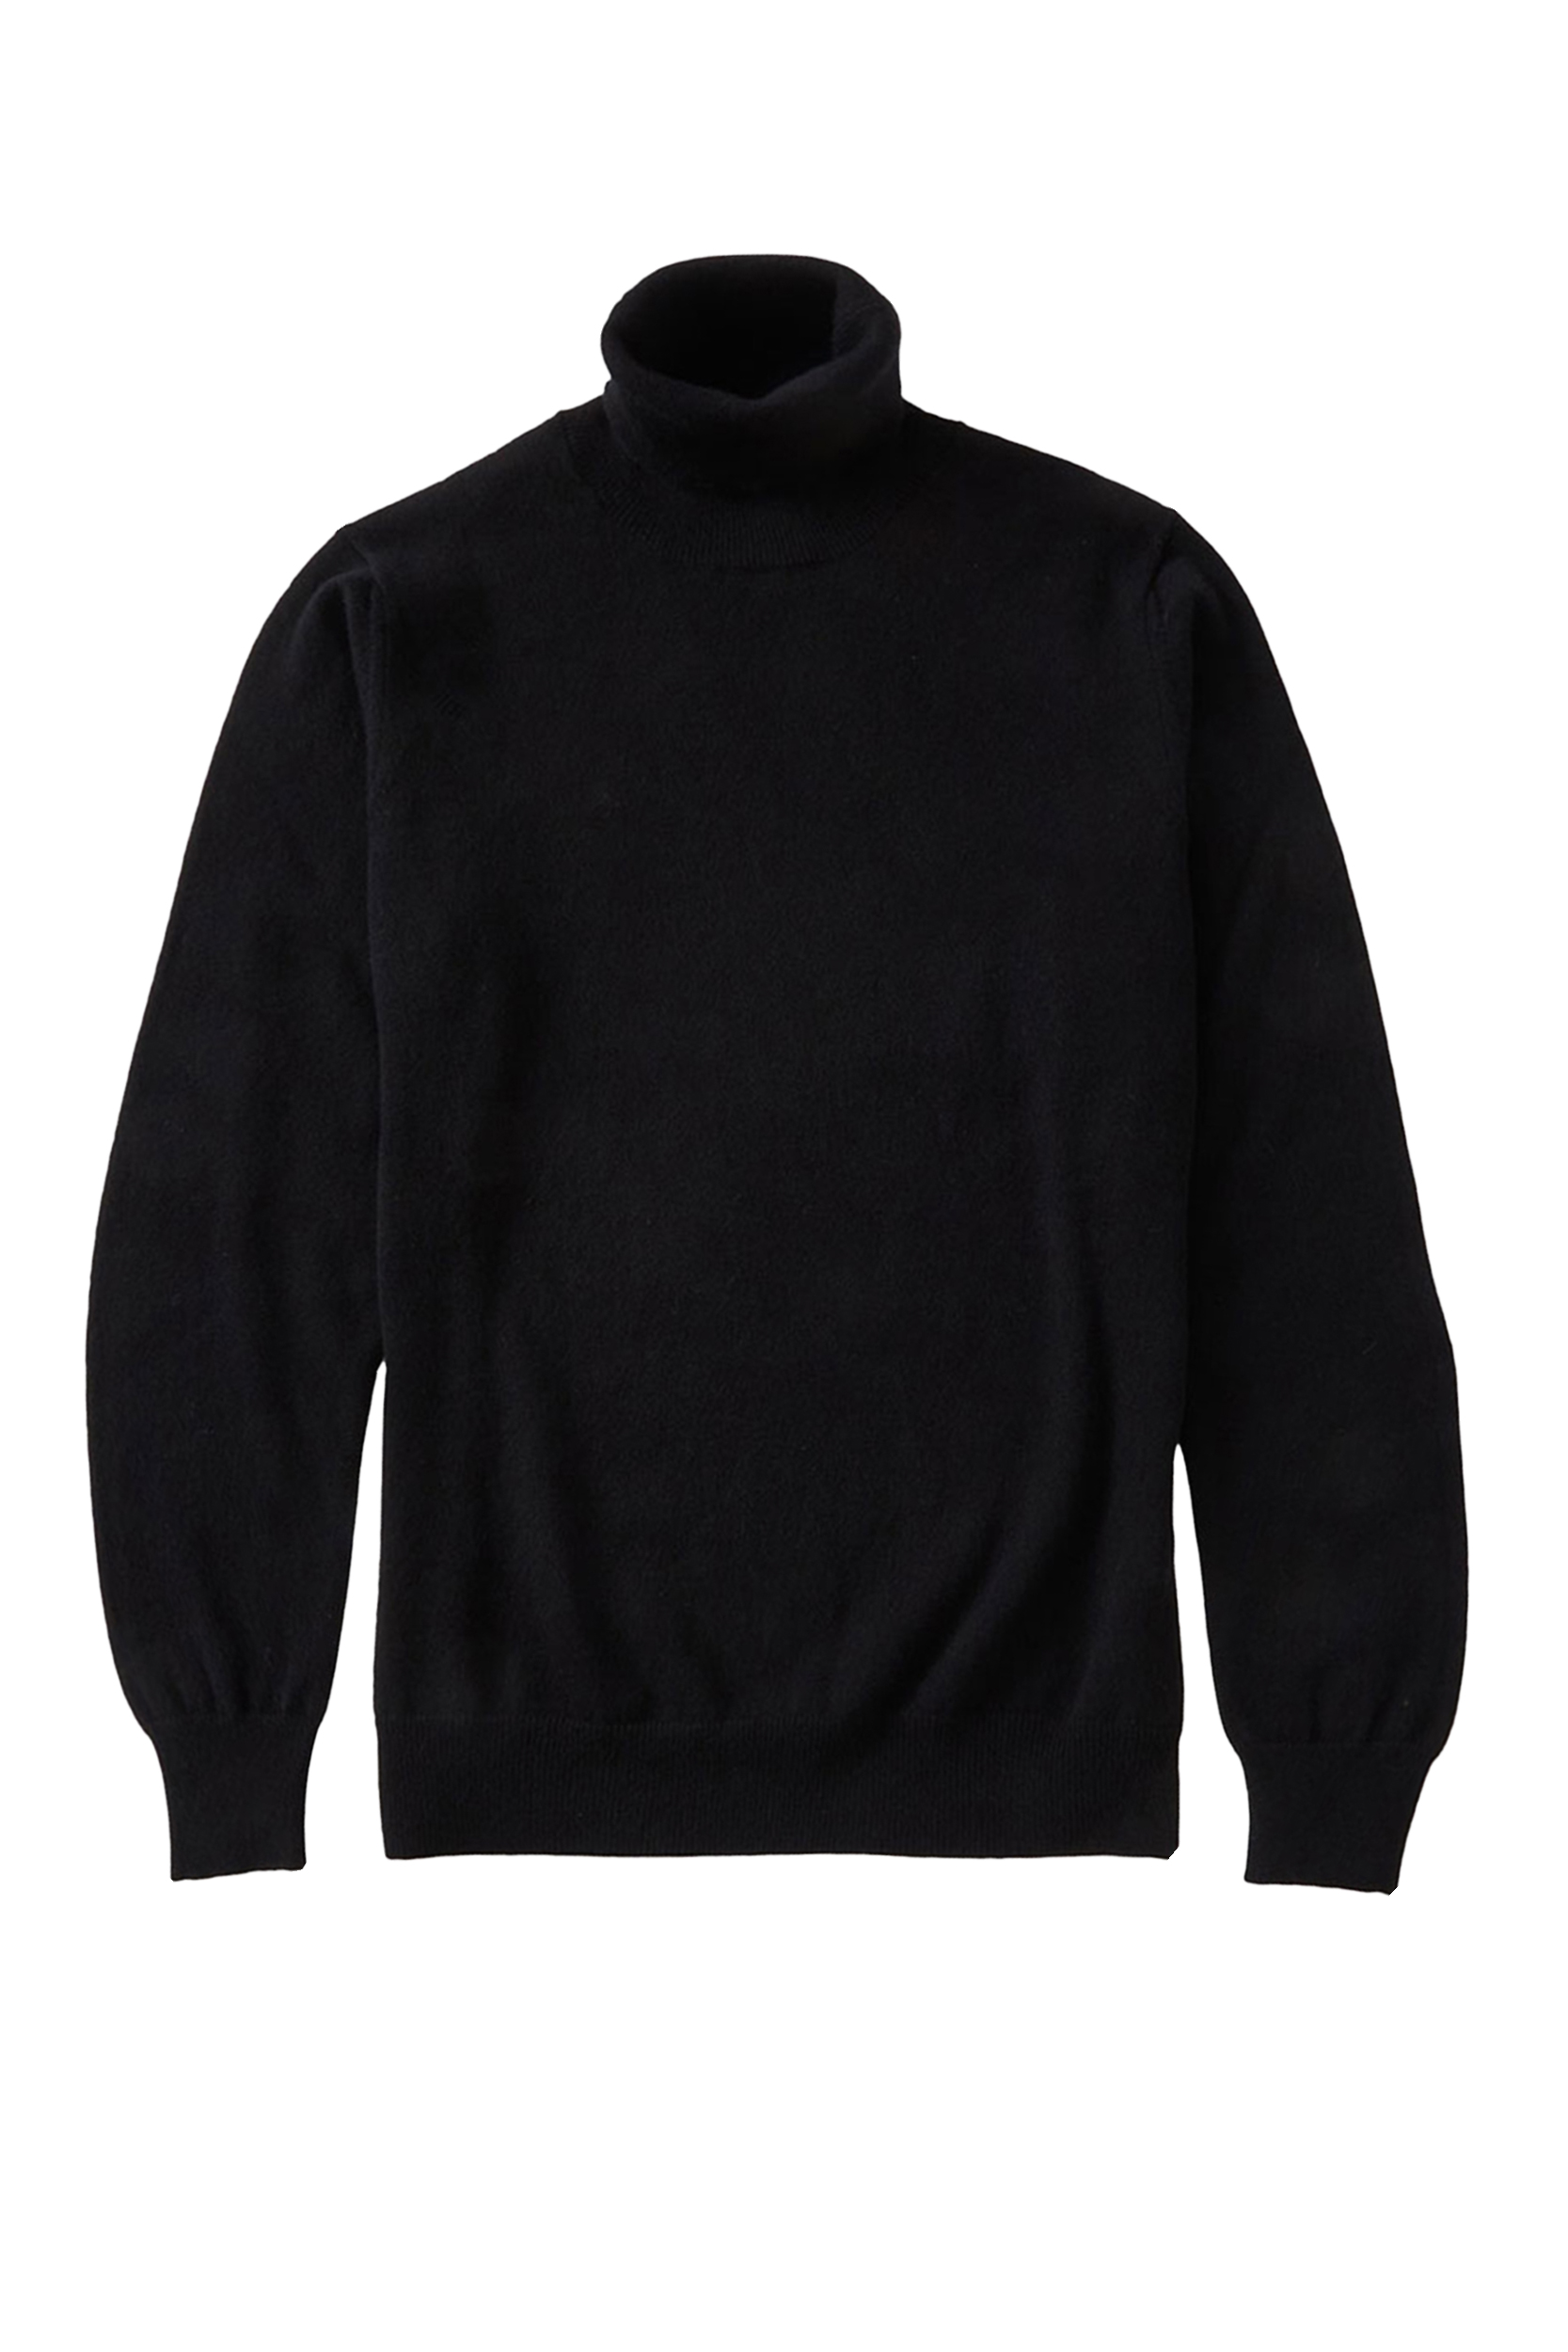 Dean black 100% cashmere turtleneck sweater - Barbanera